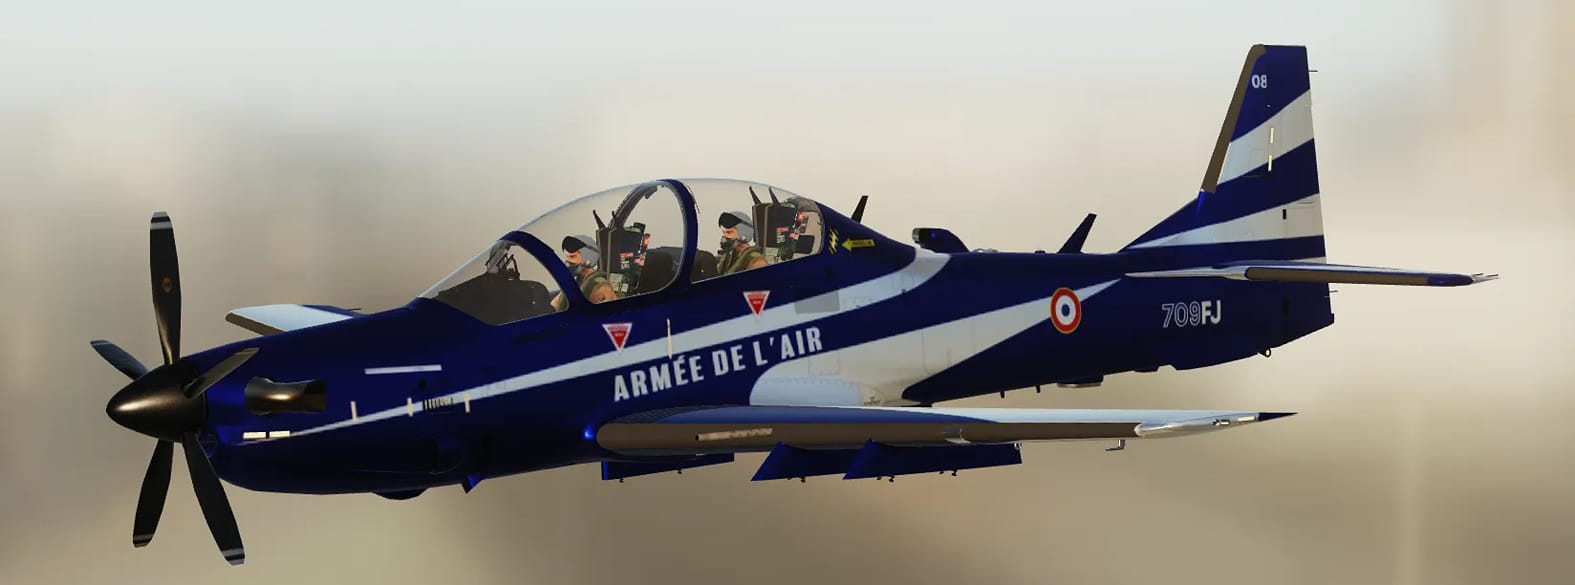 A29B Super Tucano - Armée de l'Air Française theme 709FC to 709FF